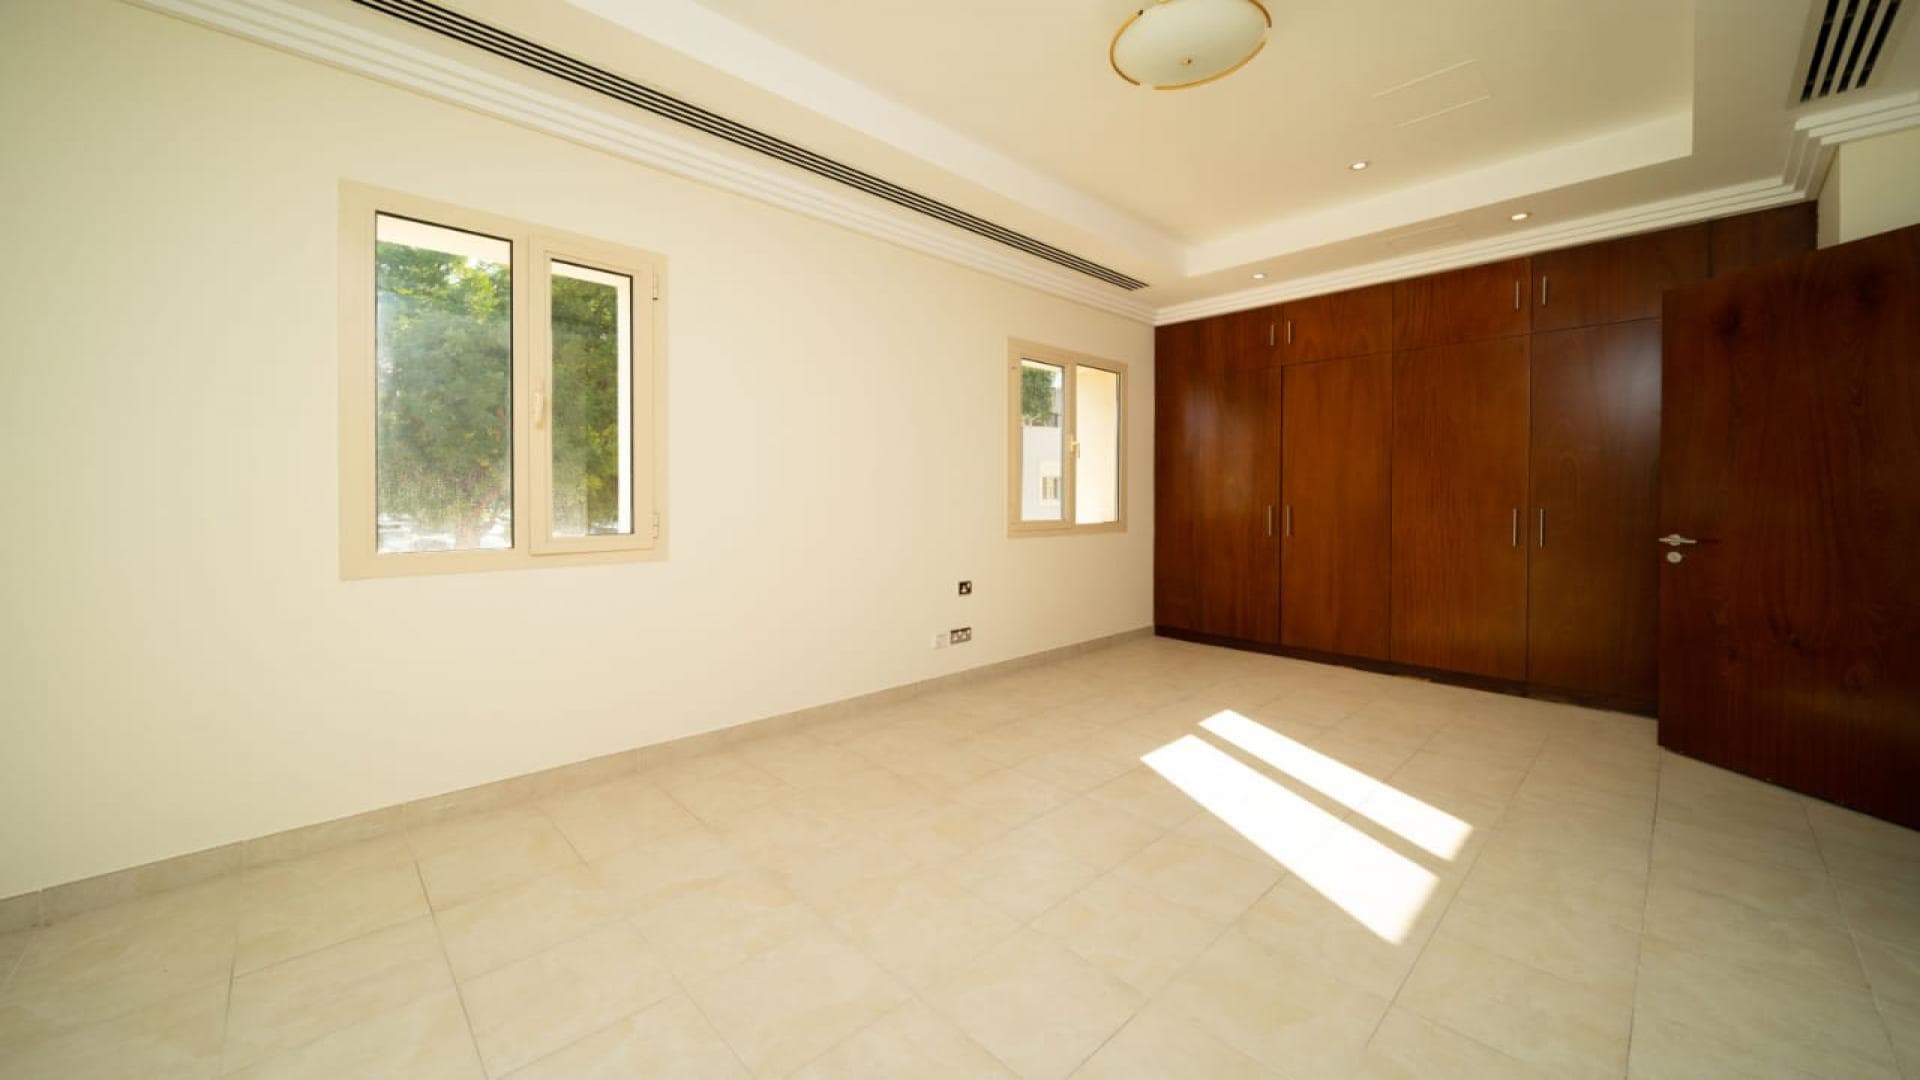 3 Bedroom Villa For Rent Fatimah Saleh Building Lp38967 31d0c3cafafdf800.jpg